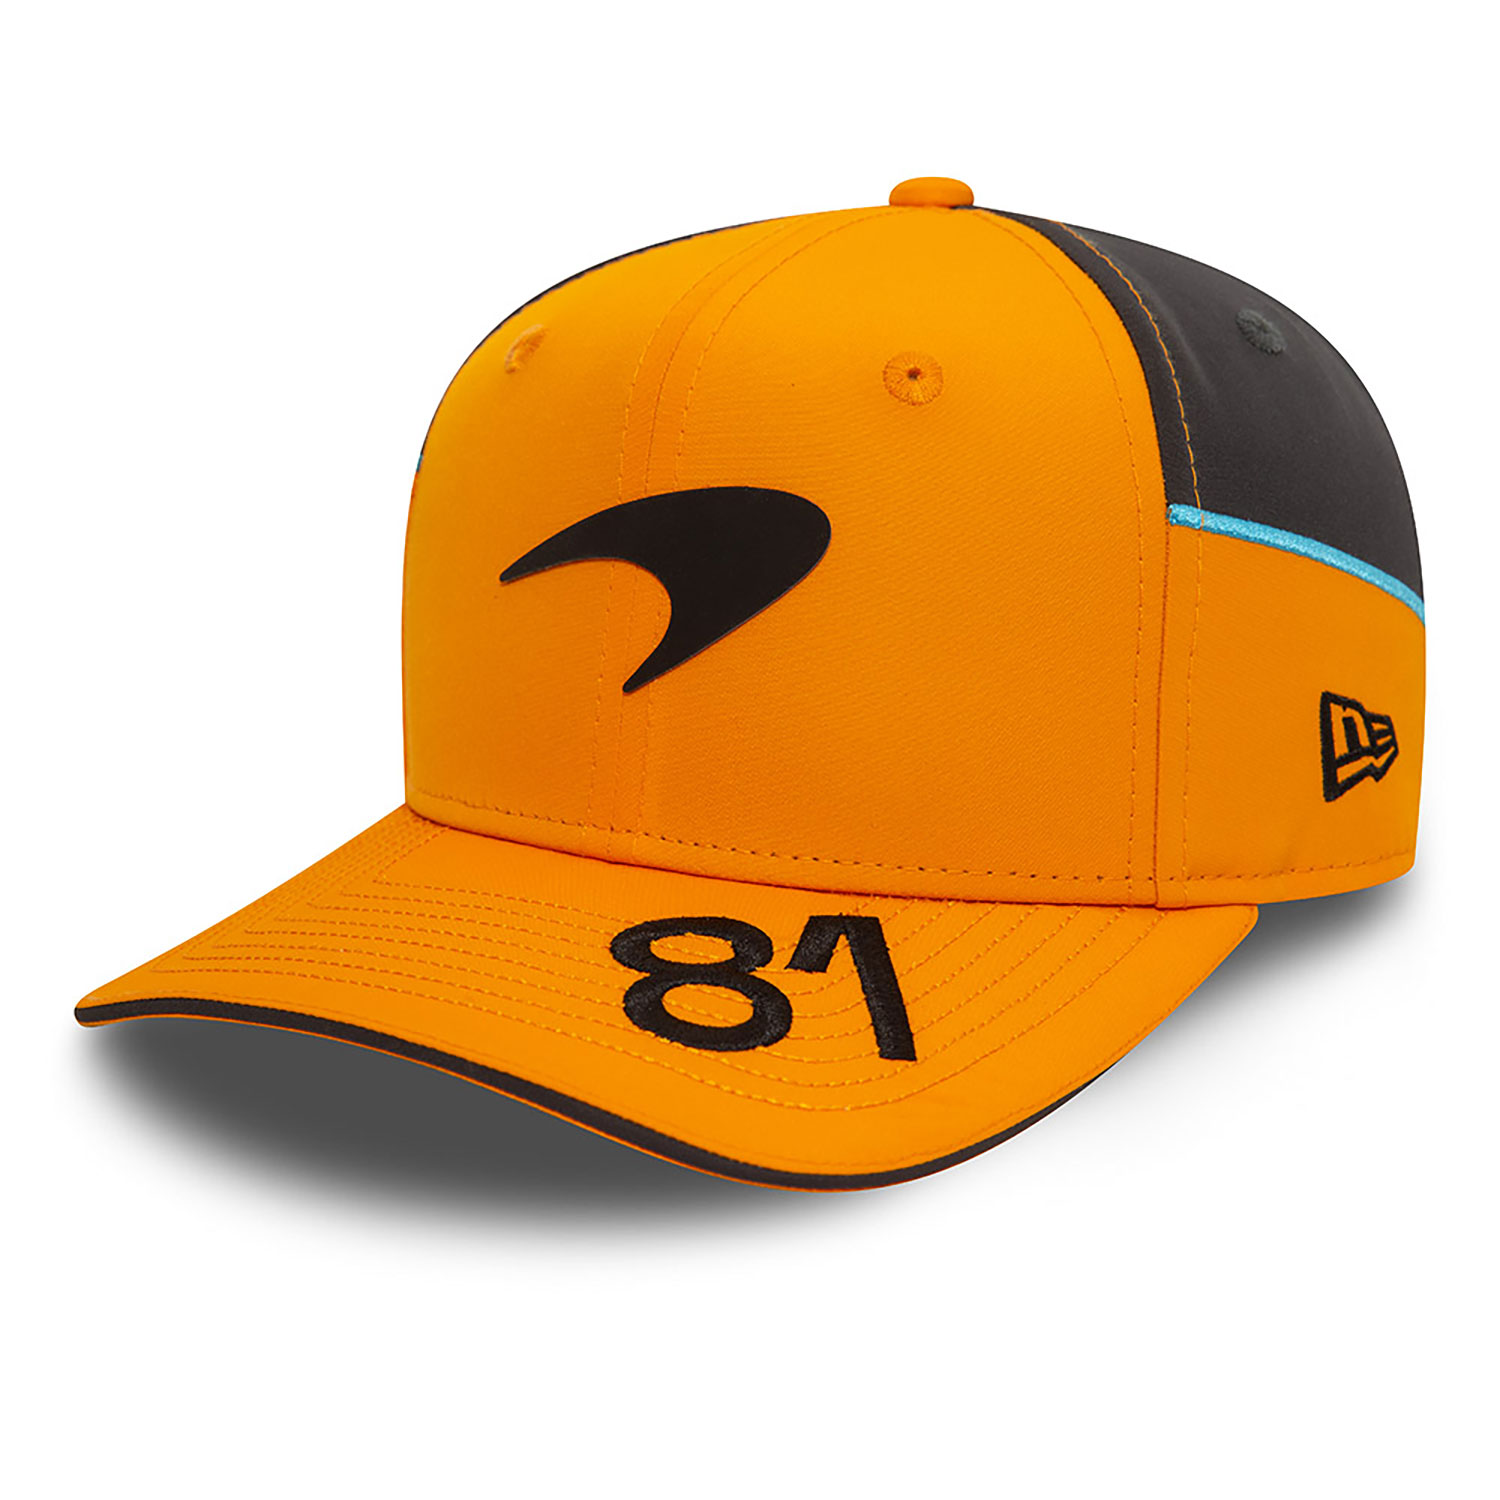 McLaren Racing Oscar Piastri Orange 9FIFTY Snapback Cap